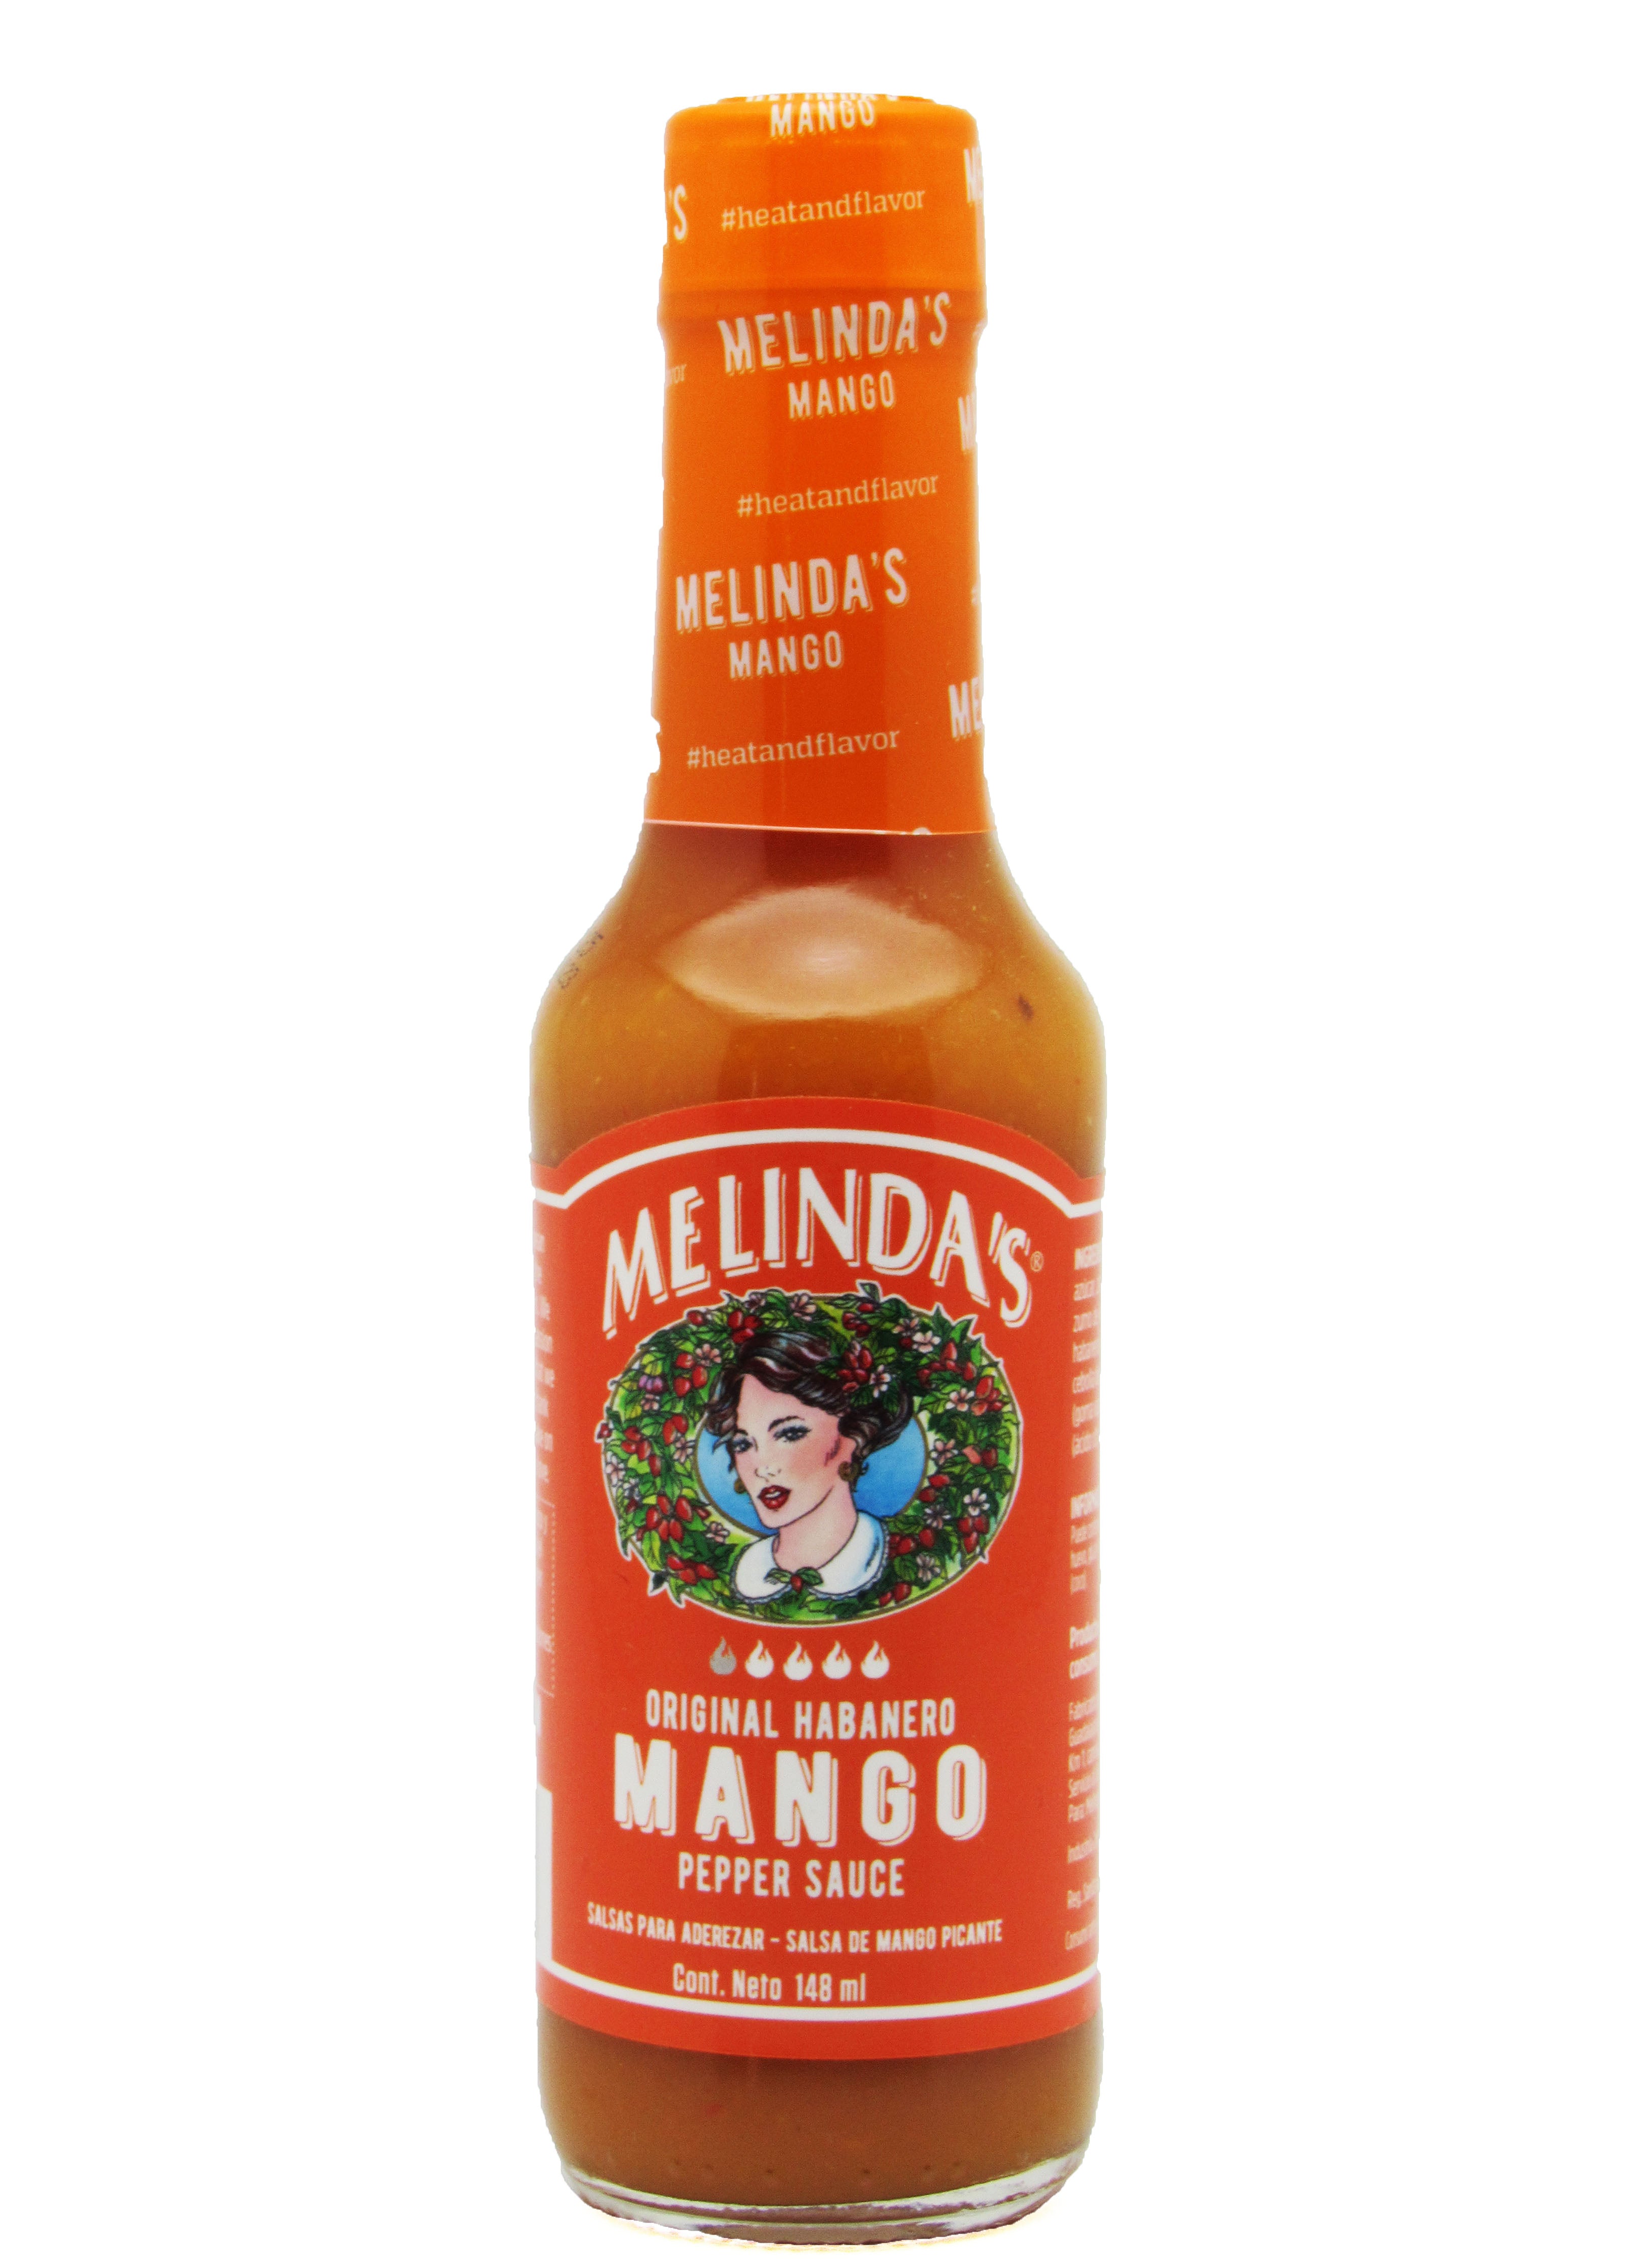 Salsa Habanero 148ml (MELINDAS) Mango Pepper Sauce